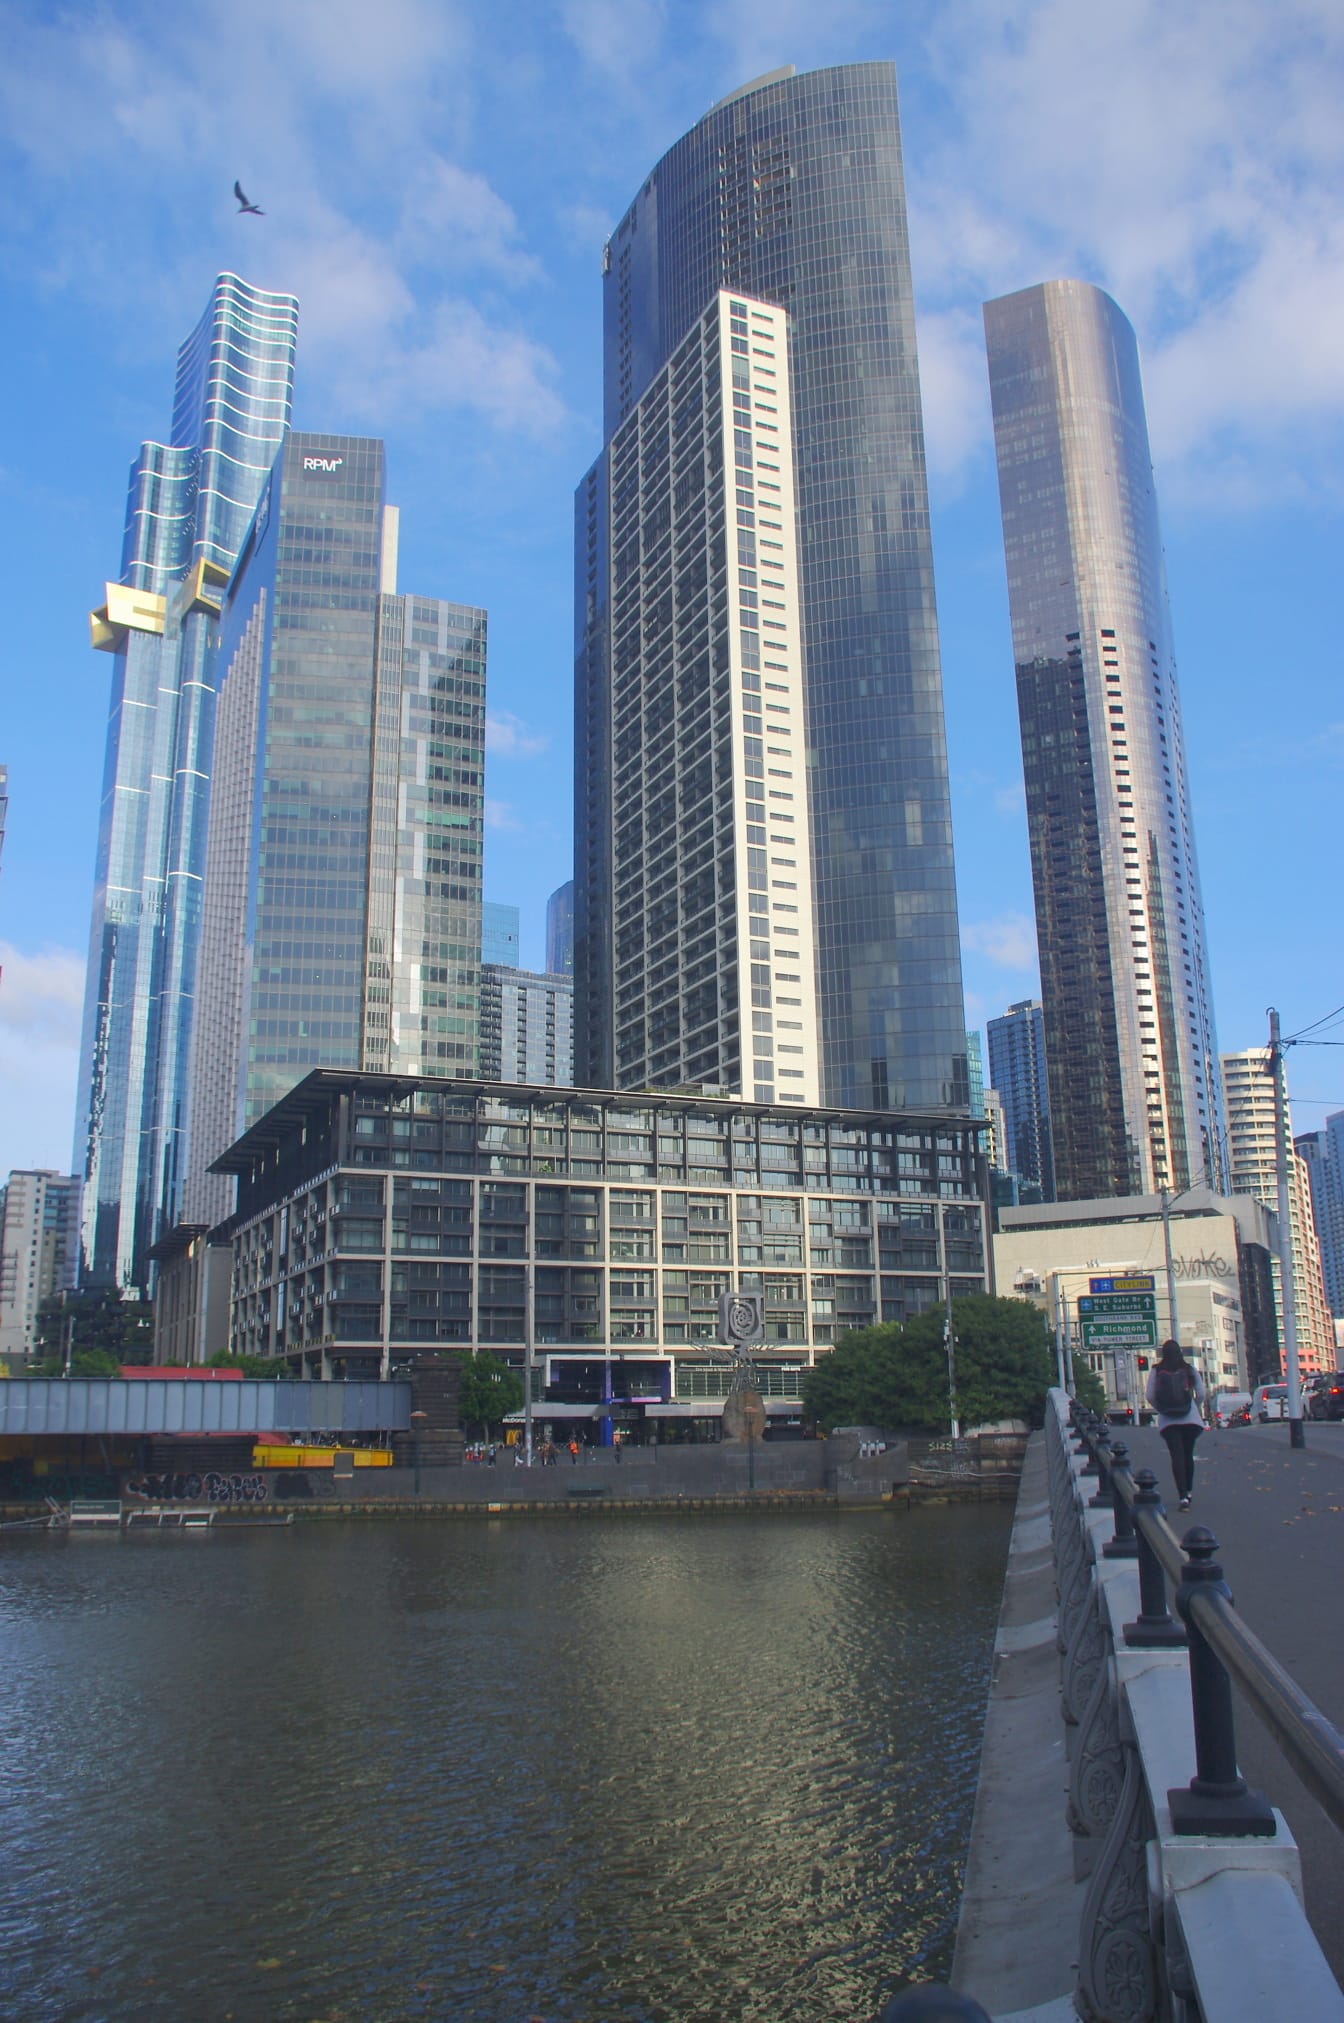 Torre residencial de rascacielos modernos en el centro de Melbourne, Australia